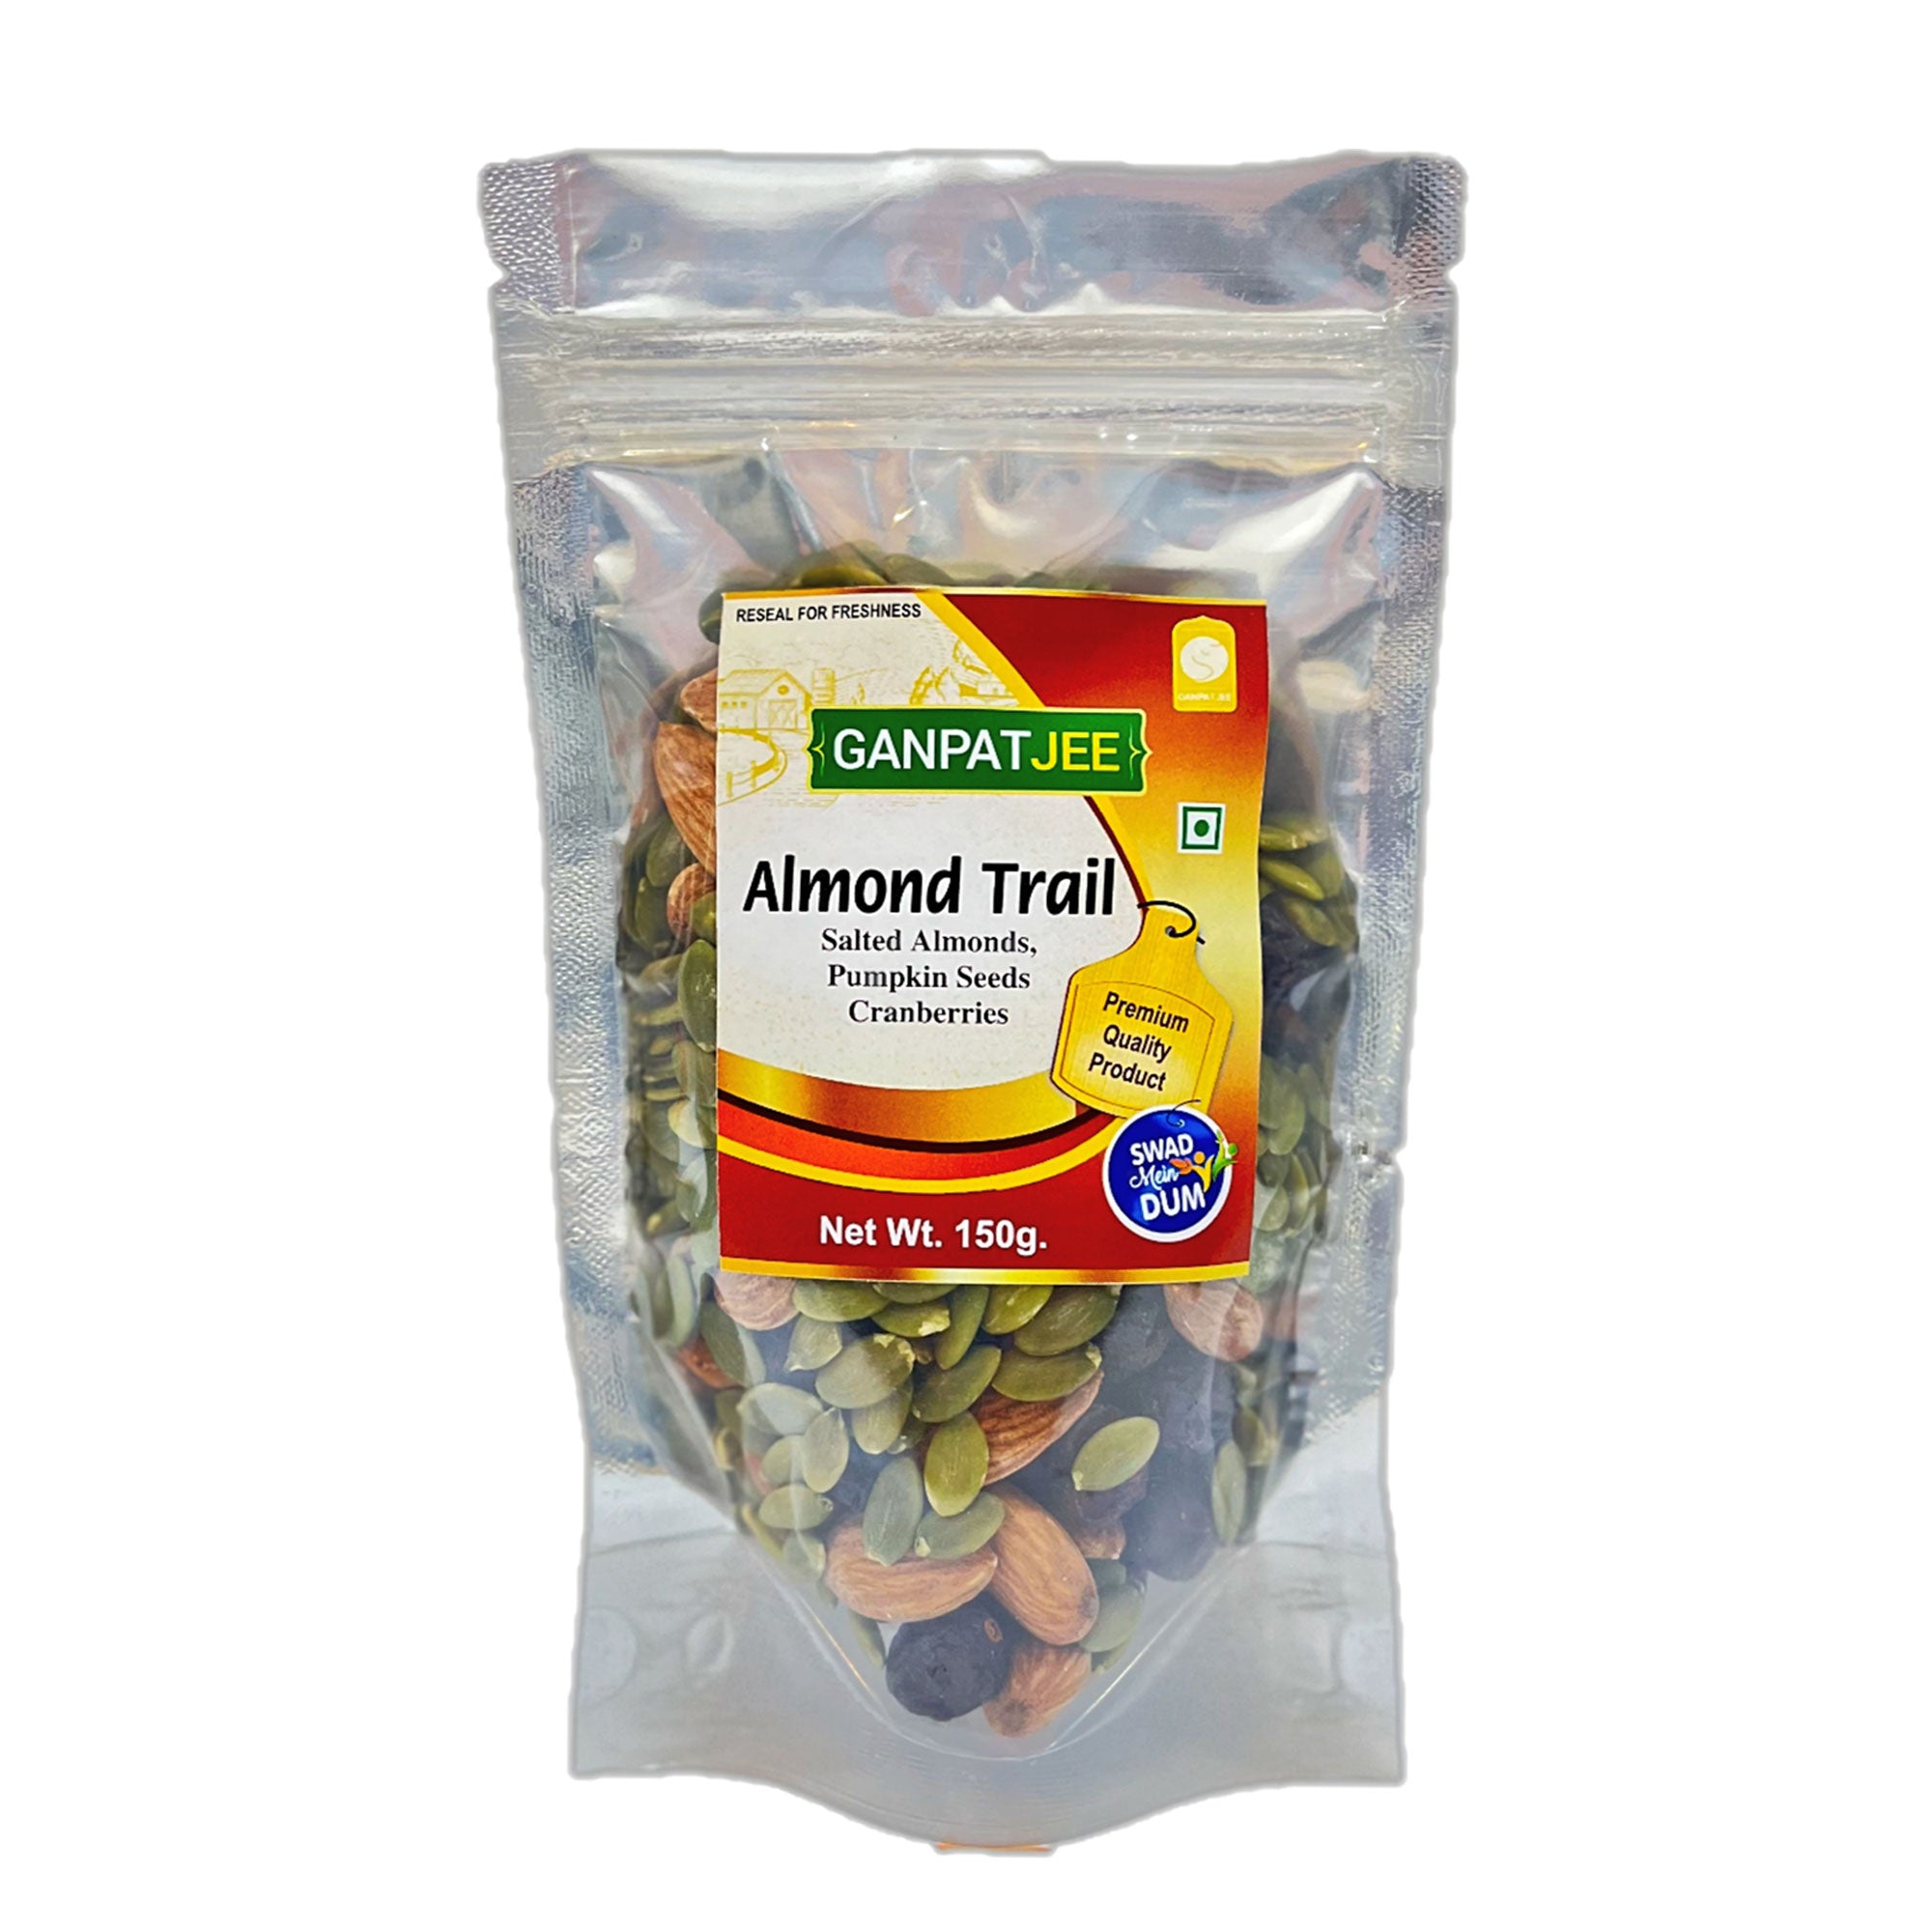 Ganpatjee Almond Trail 150G | Roasted Almond, Roasted Pumkin Seeds, Cranberries